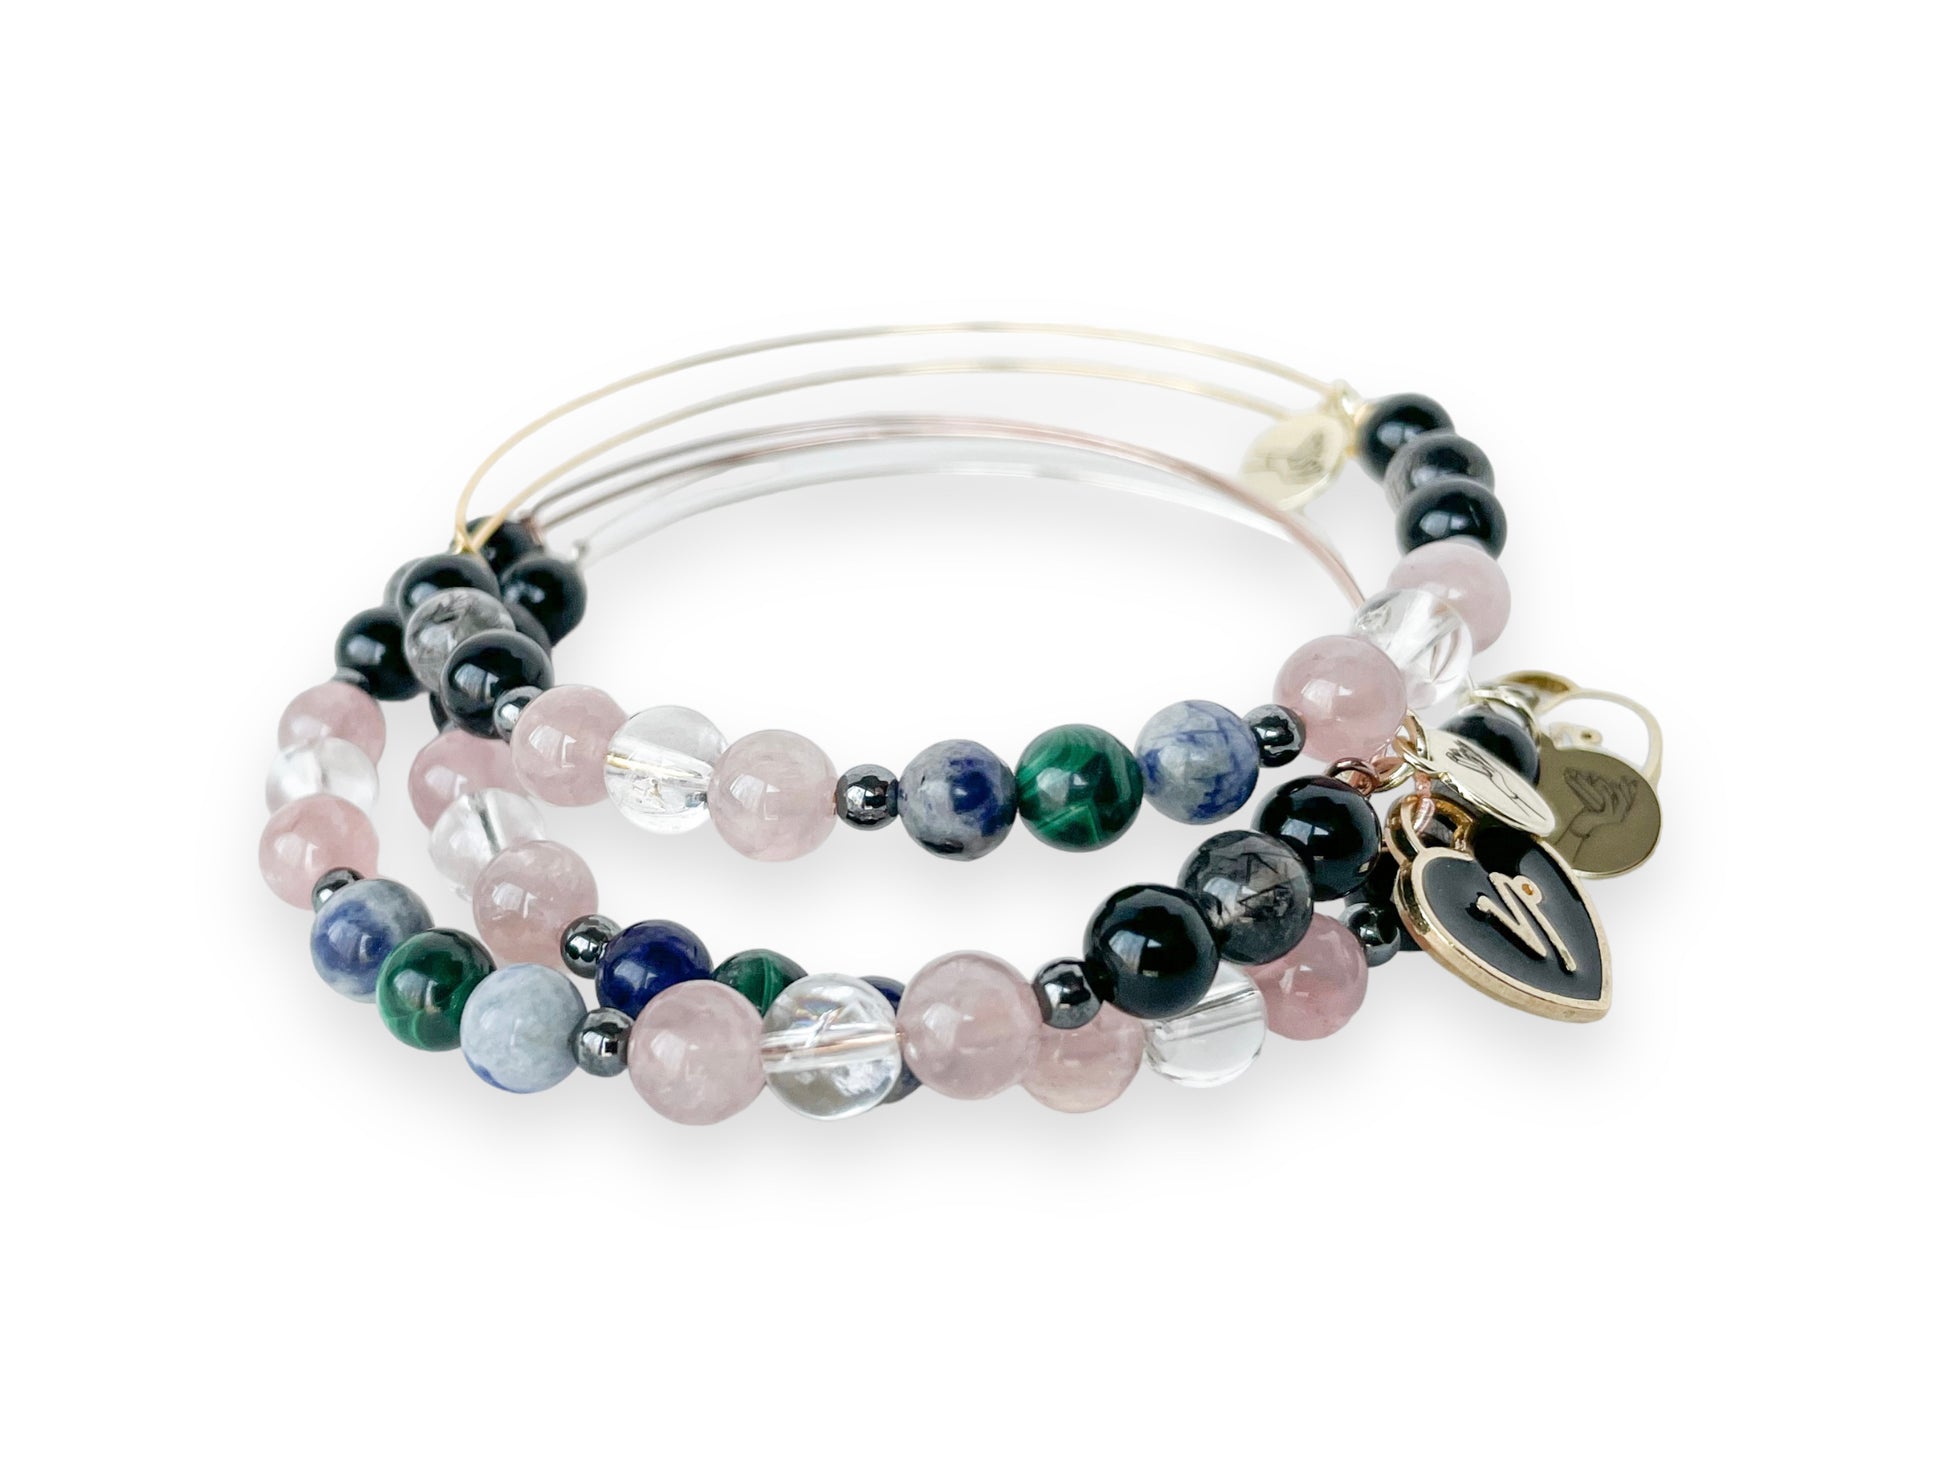 Stylish Capricorn Bracelet featuring Rose Quartz and Clear Quartz.